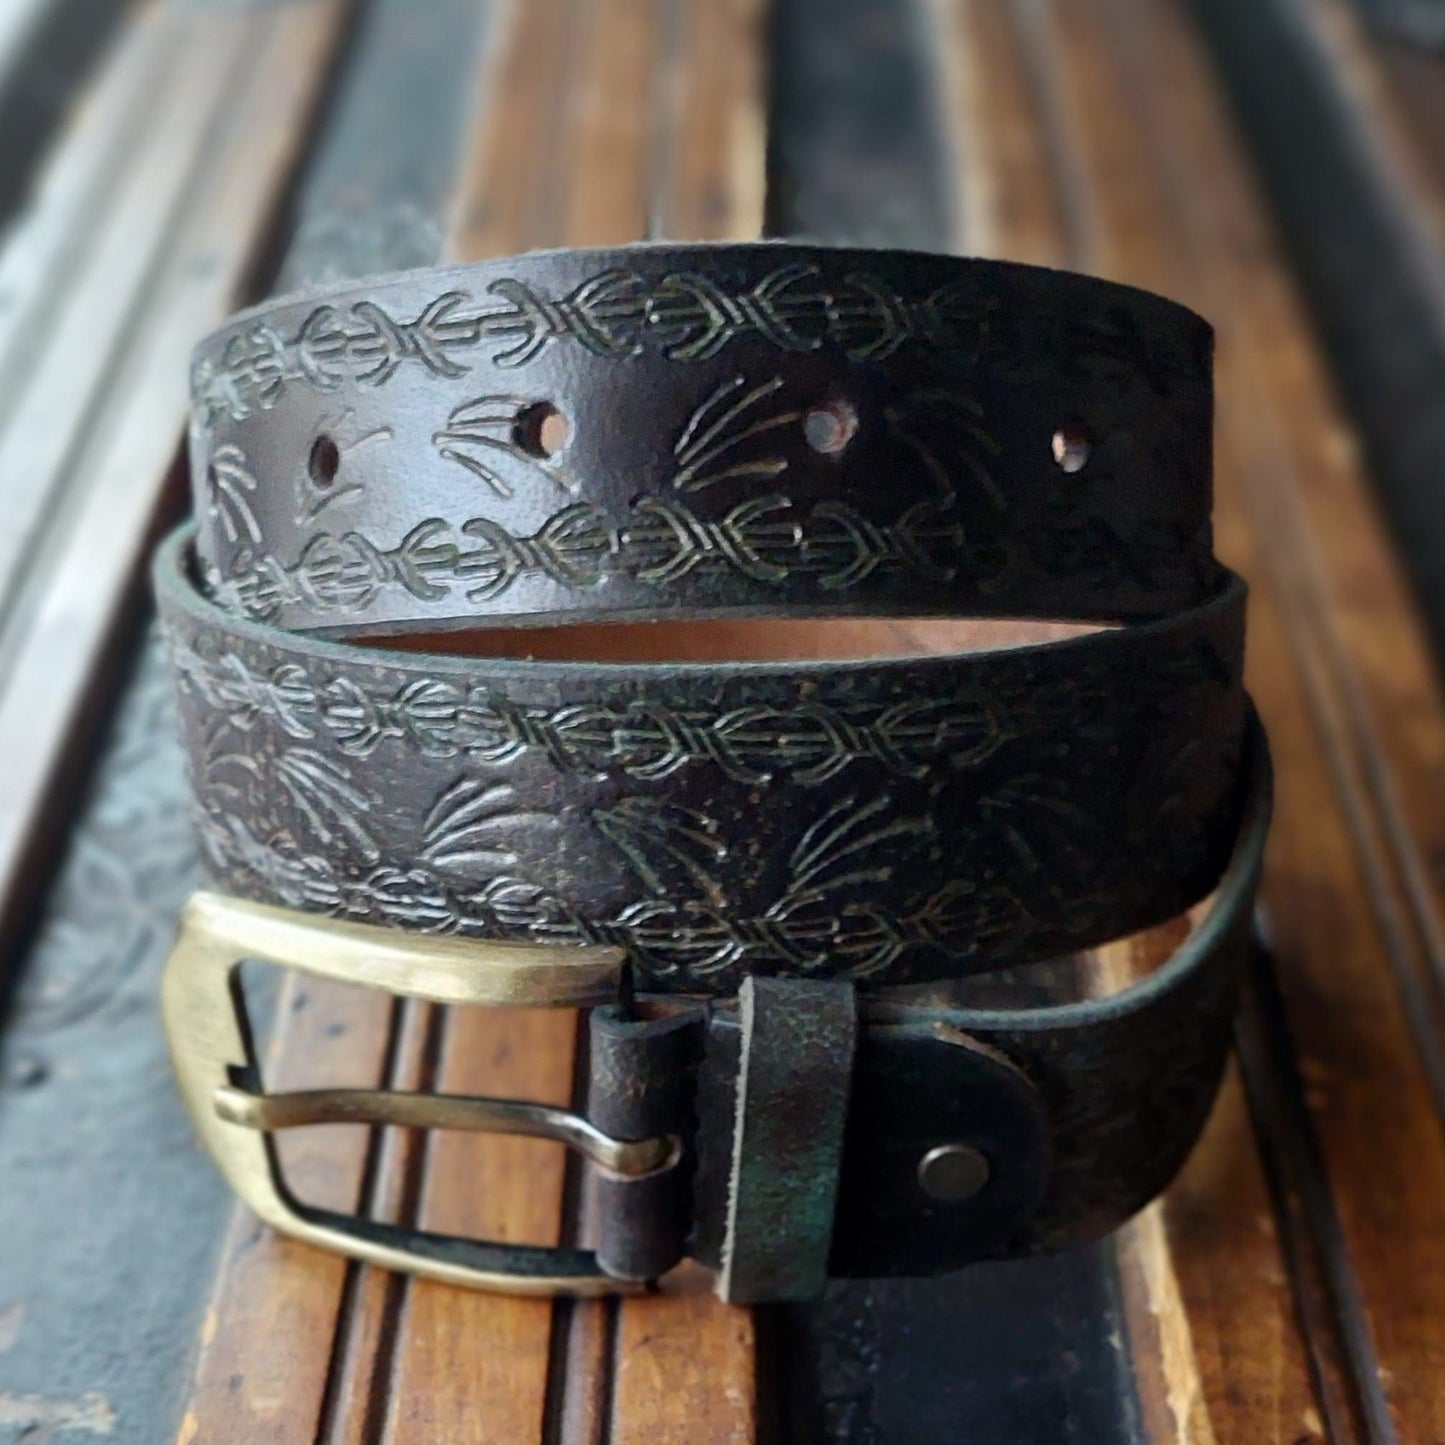 Men's Tooled Leather Belt Aztec type design